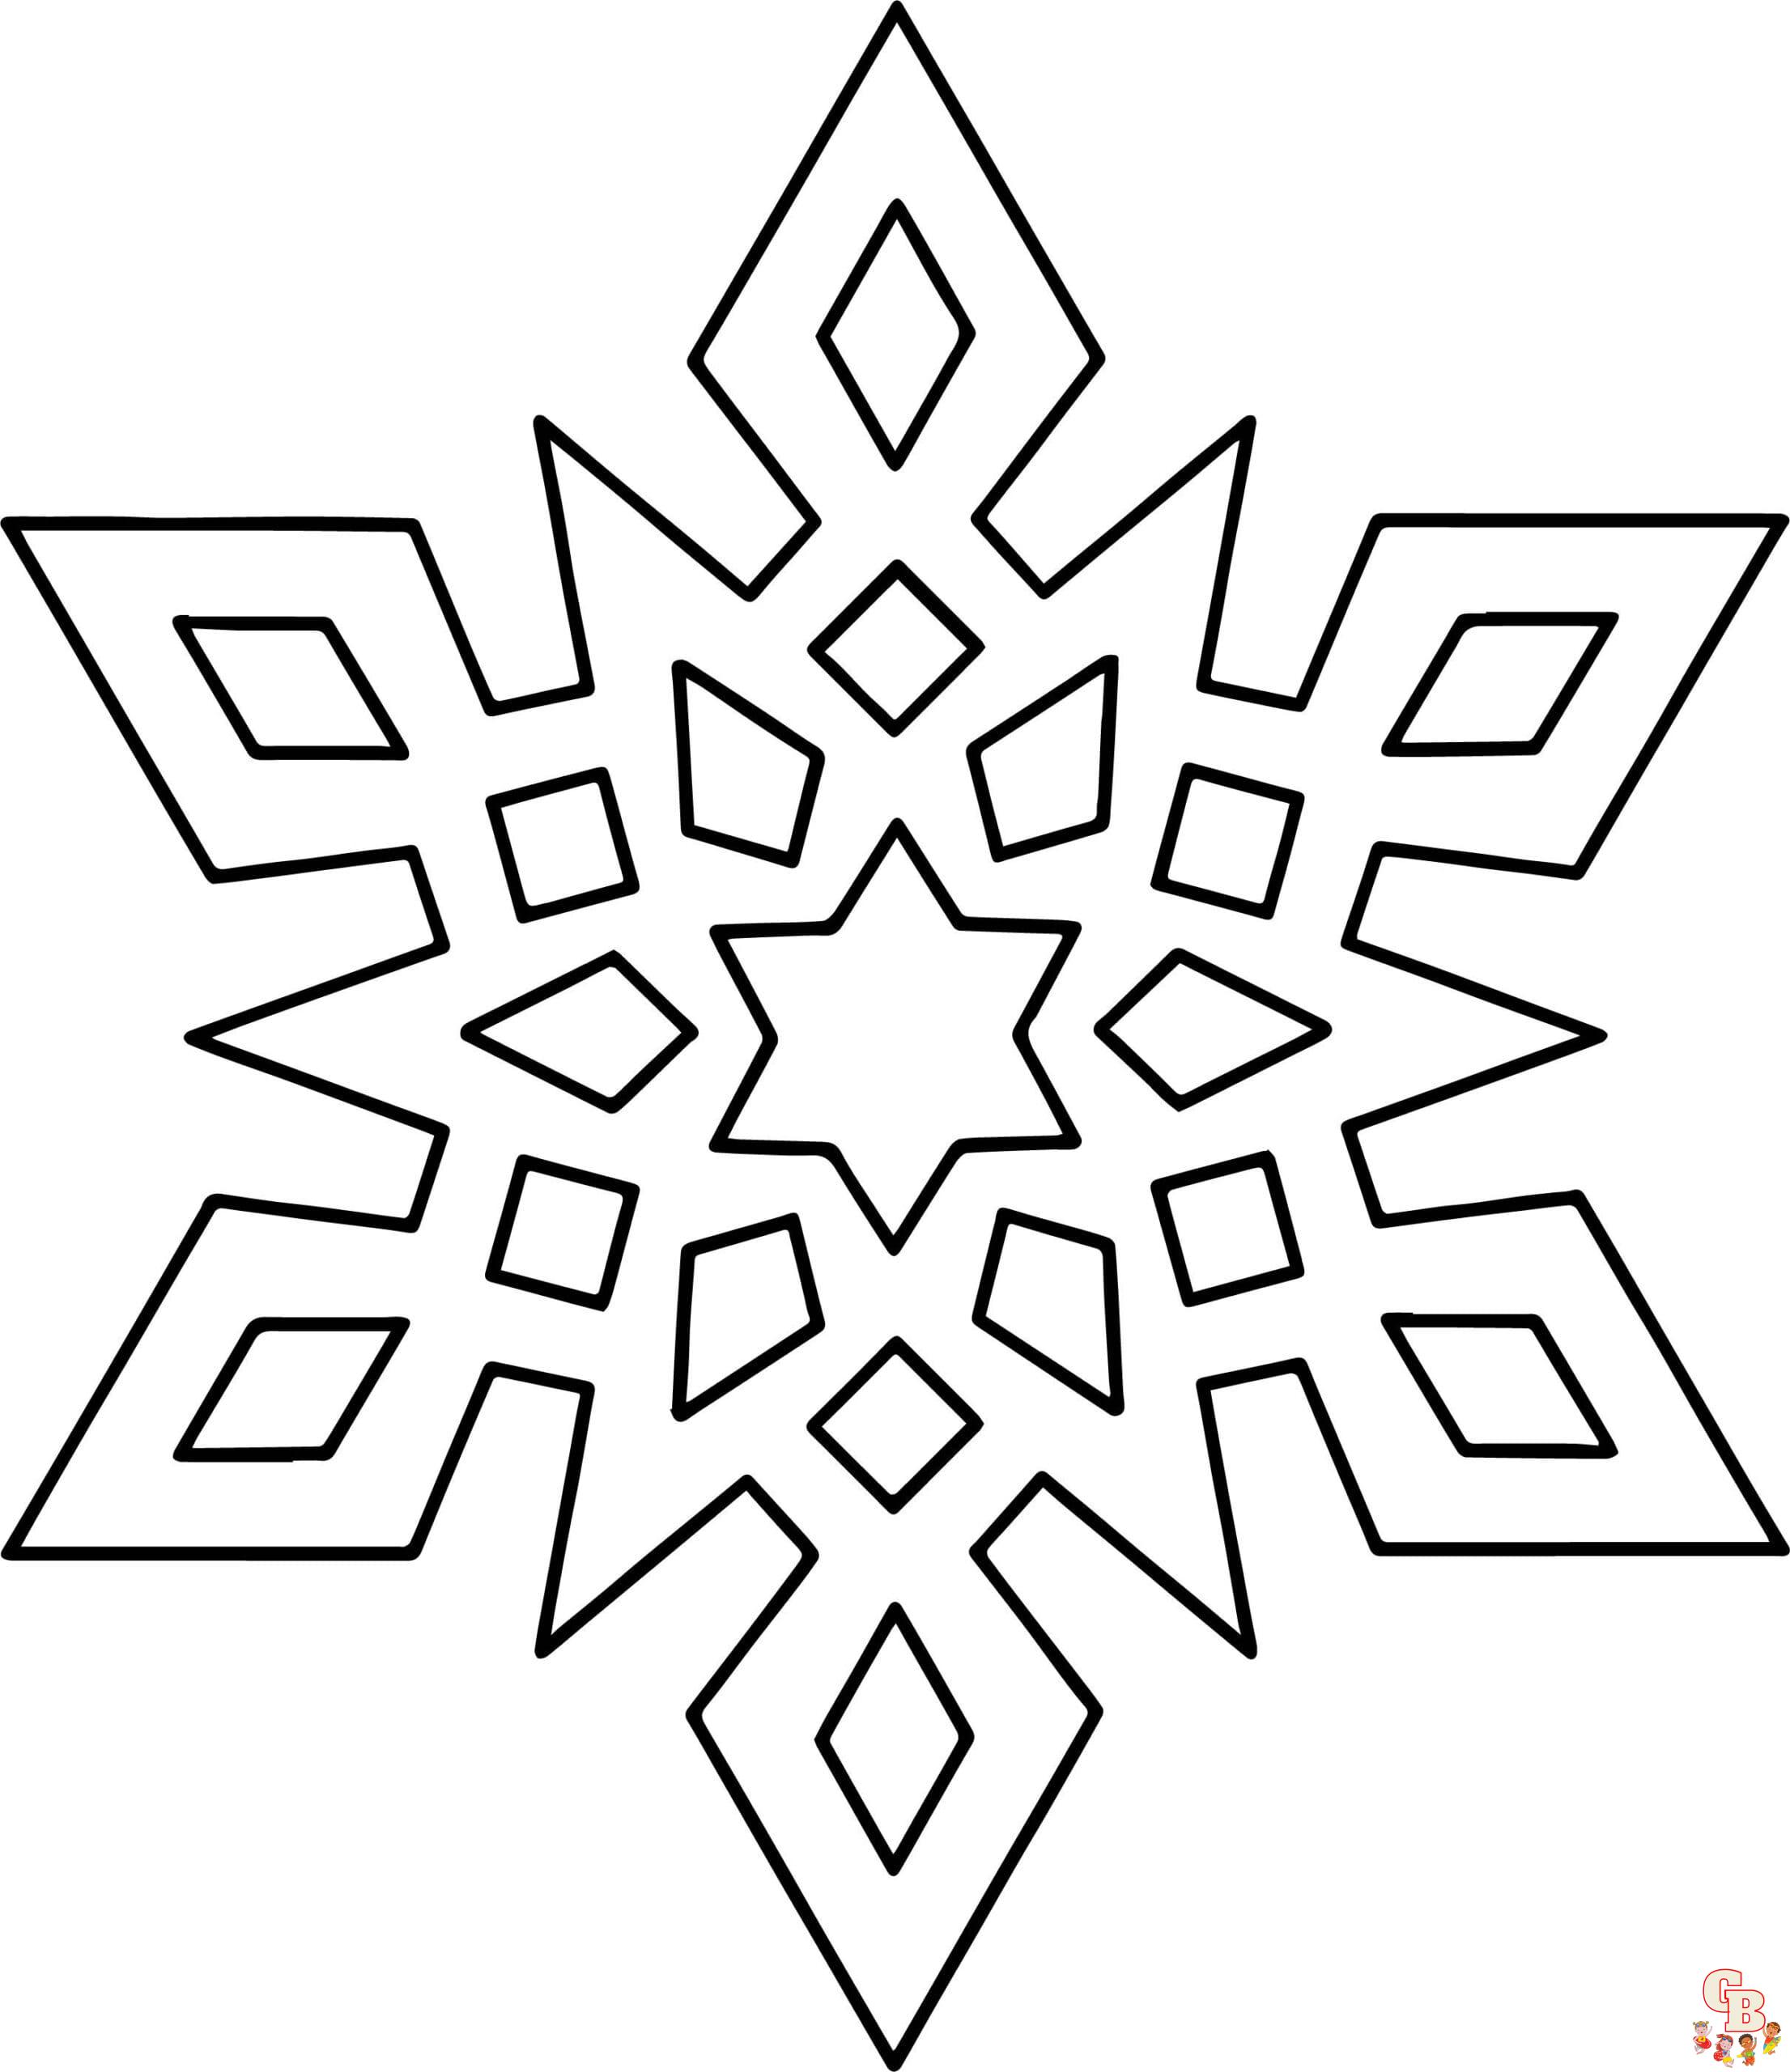 Printable Snowflake coloring sheets